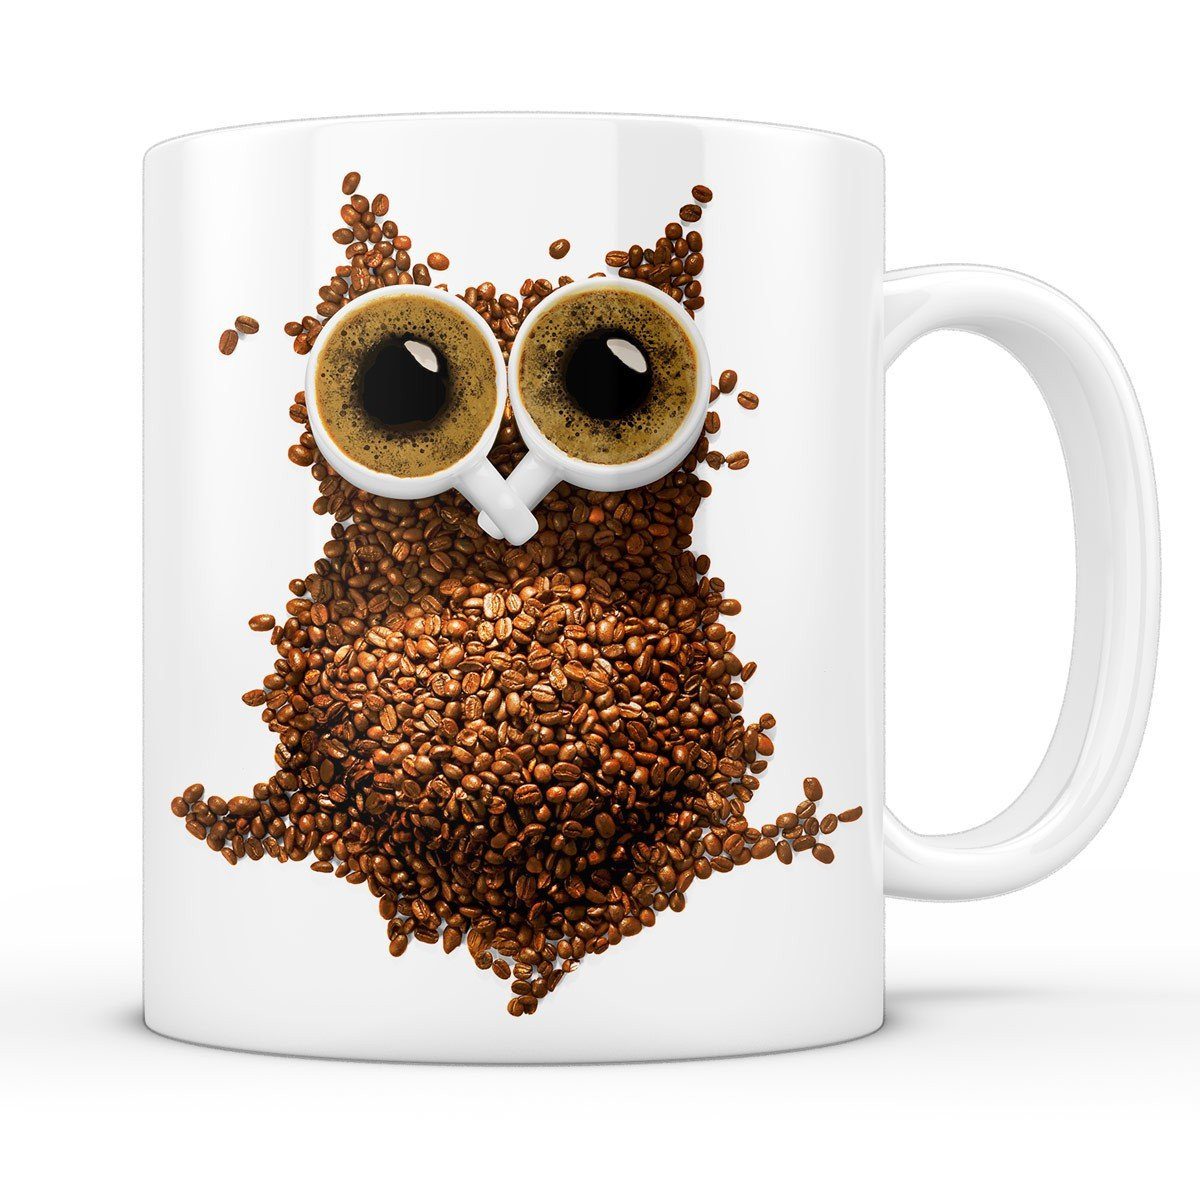 style3 Tasse, Keramik, Kaffeeeule Kaffeebecher Tasse Koffein kraft cafe kaffee-bohnen coffee baritsta koffein junkie uhu